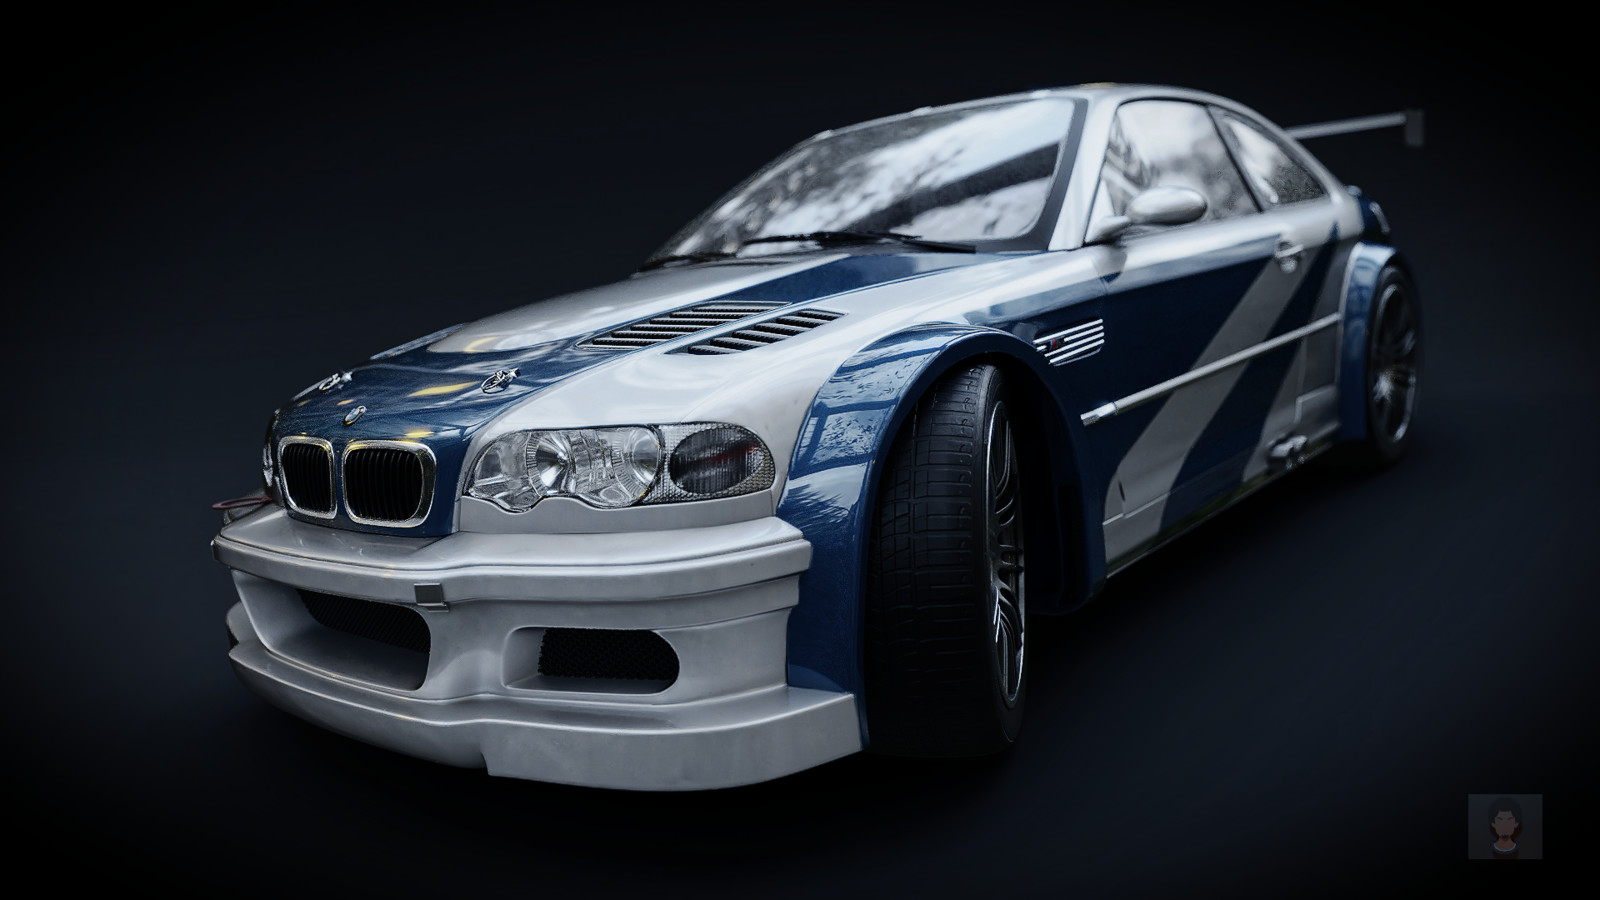 Nfs Mw 2005 Bmw M3 Gtr Josafá Batista - BMW E46 M3 GTR - Need For Speed Most Wanted (2005)